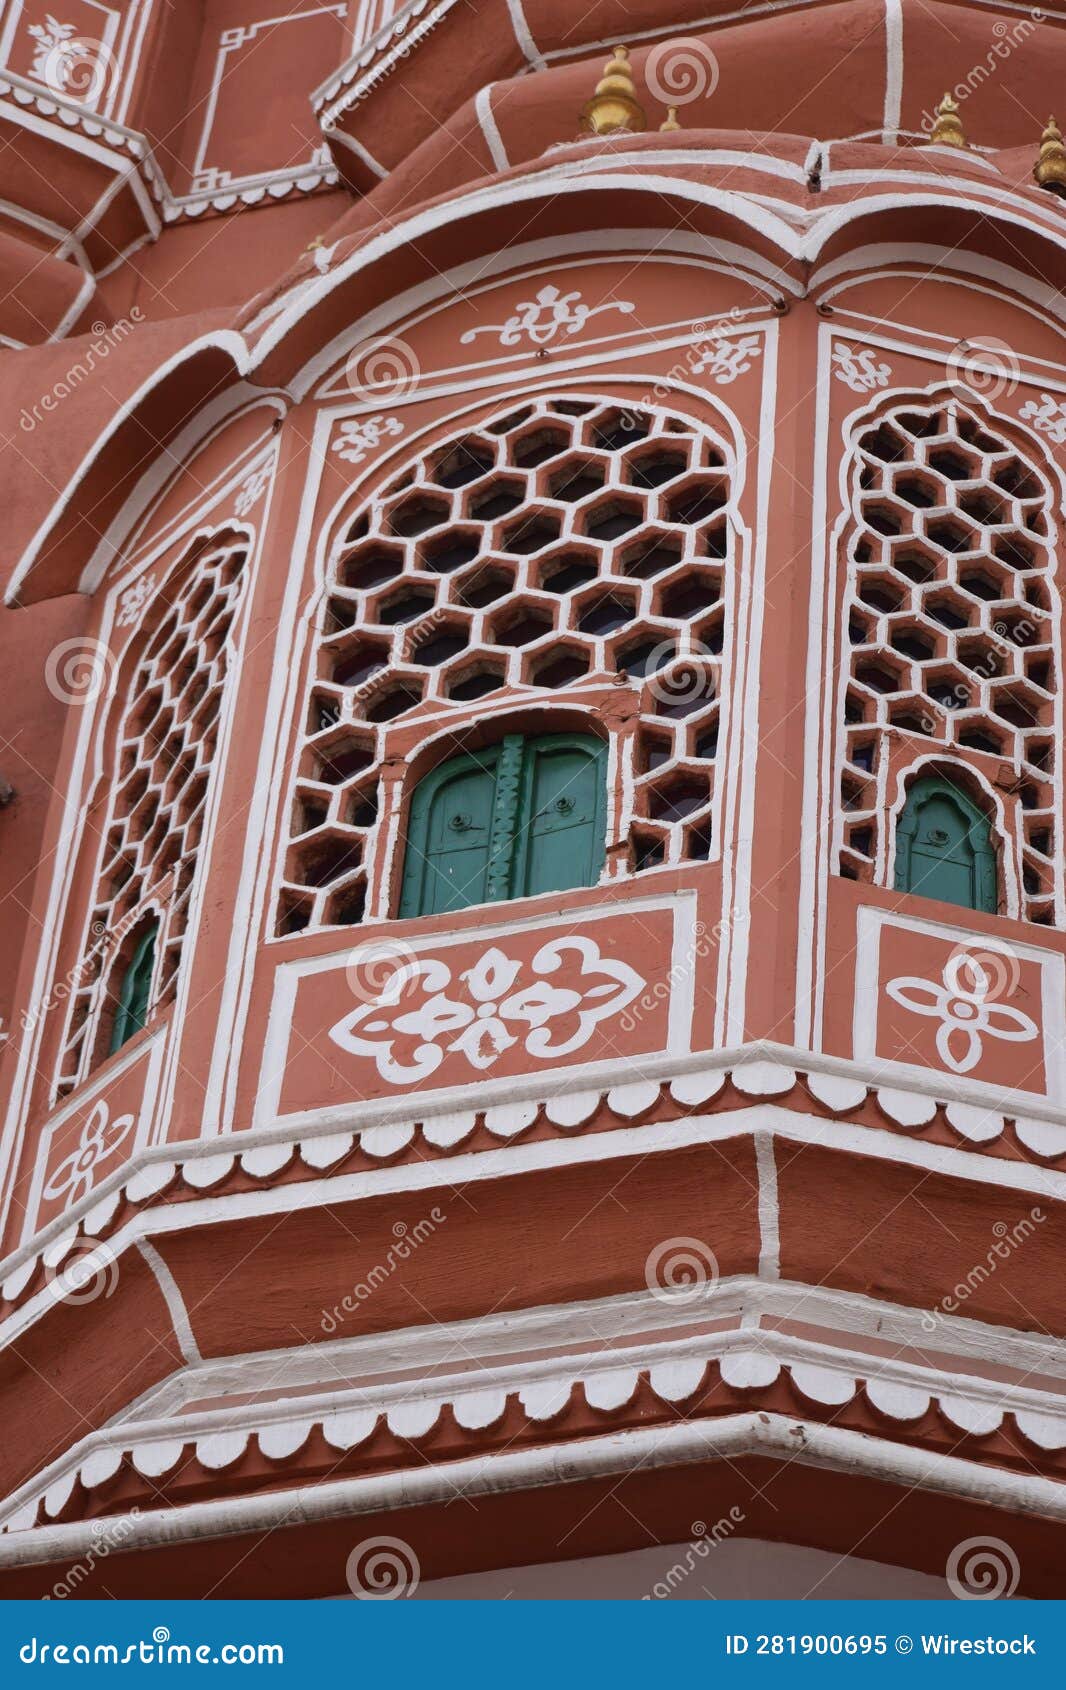 How to draw Hawa Mahal, Jaipur, India